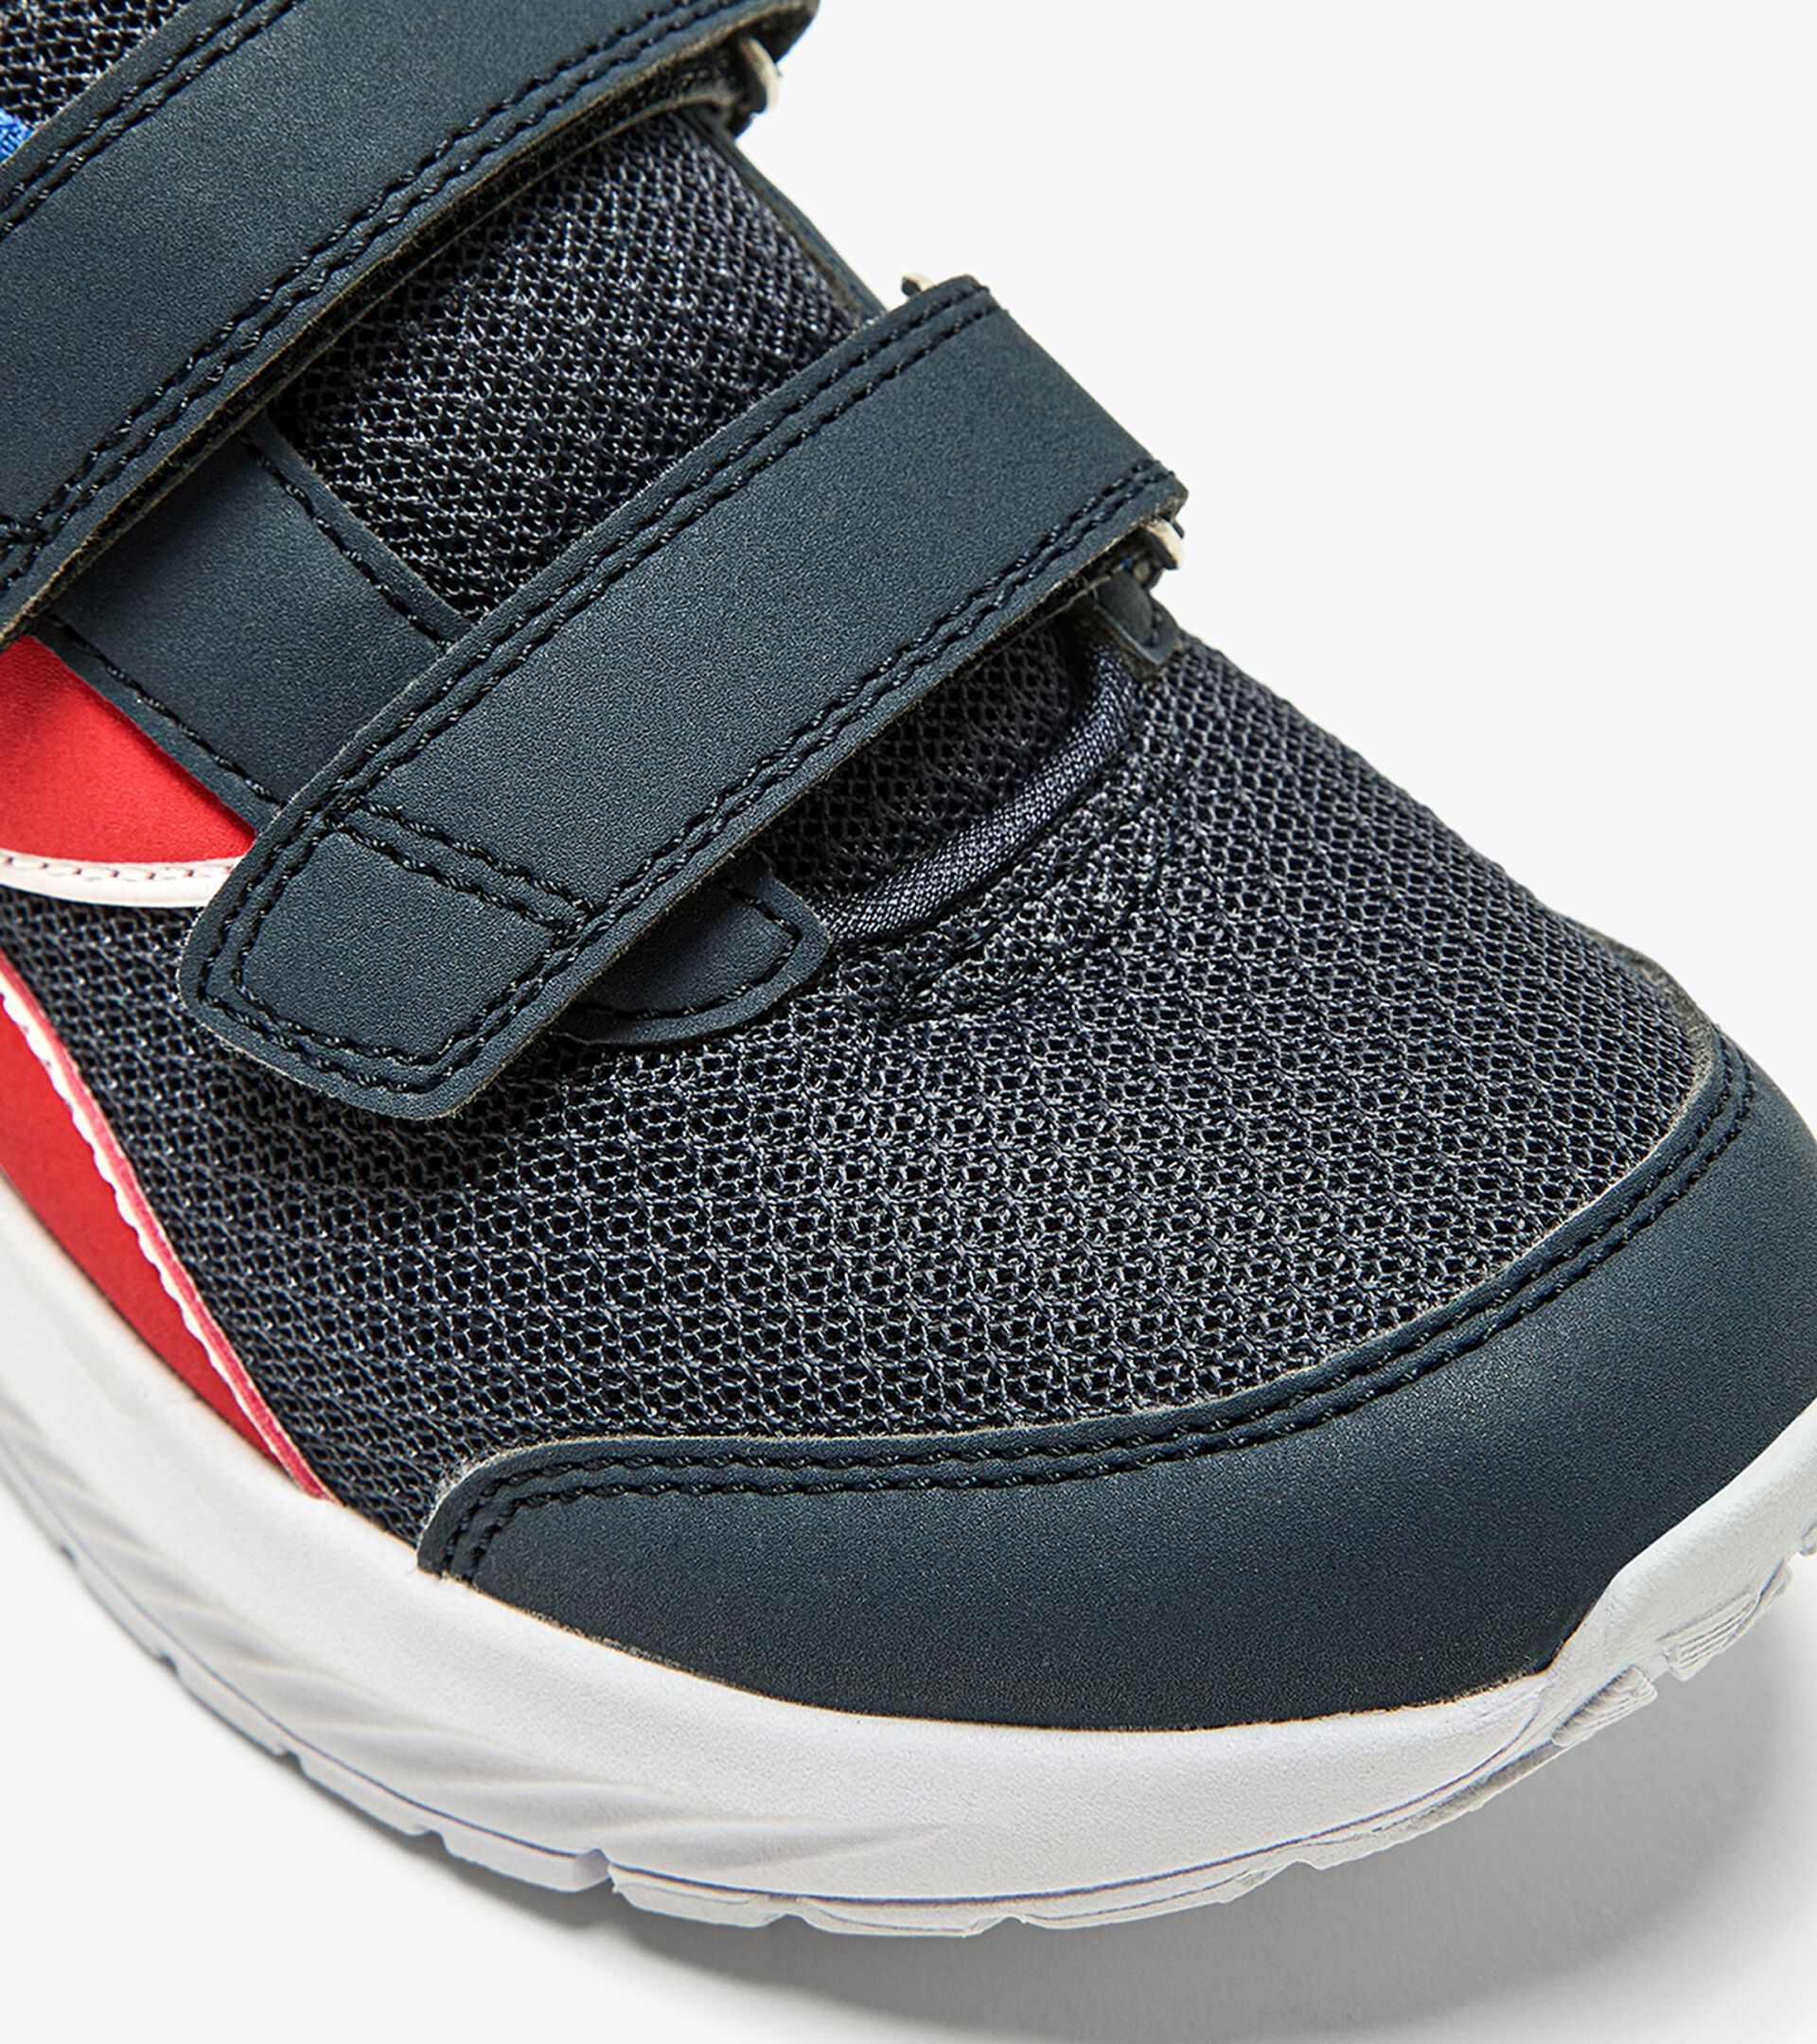 Junior running shoes - Gender Neutral FALCON 3 JR V BLUE CORSAIR /HIGH RISK RED - Diadora